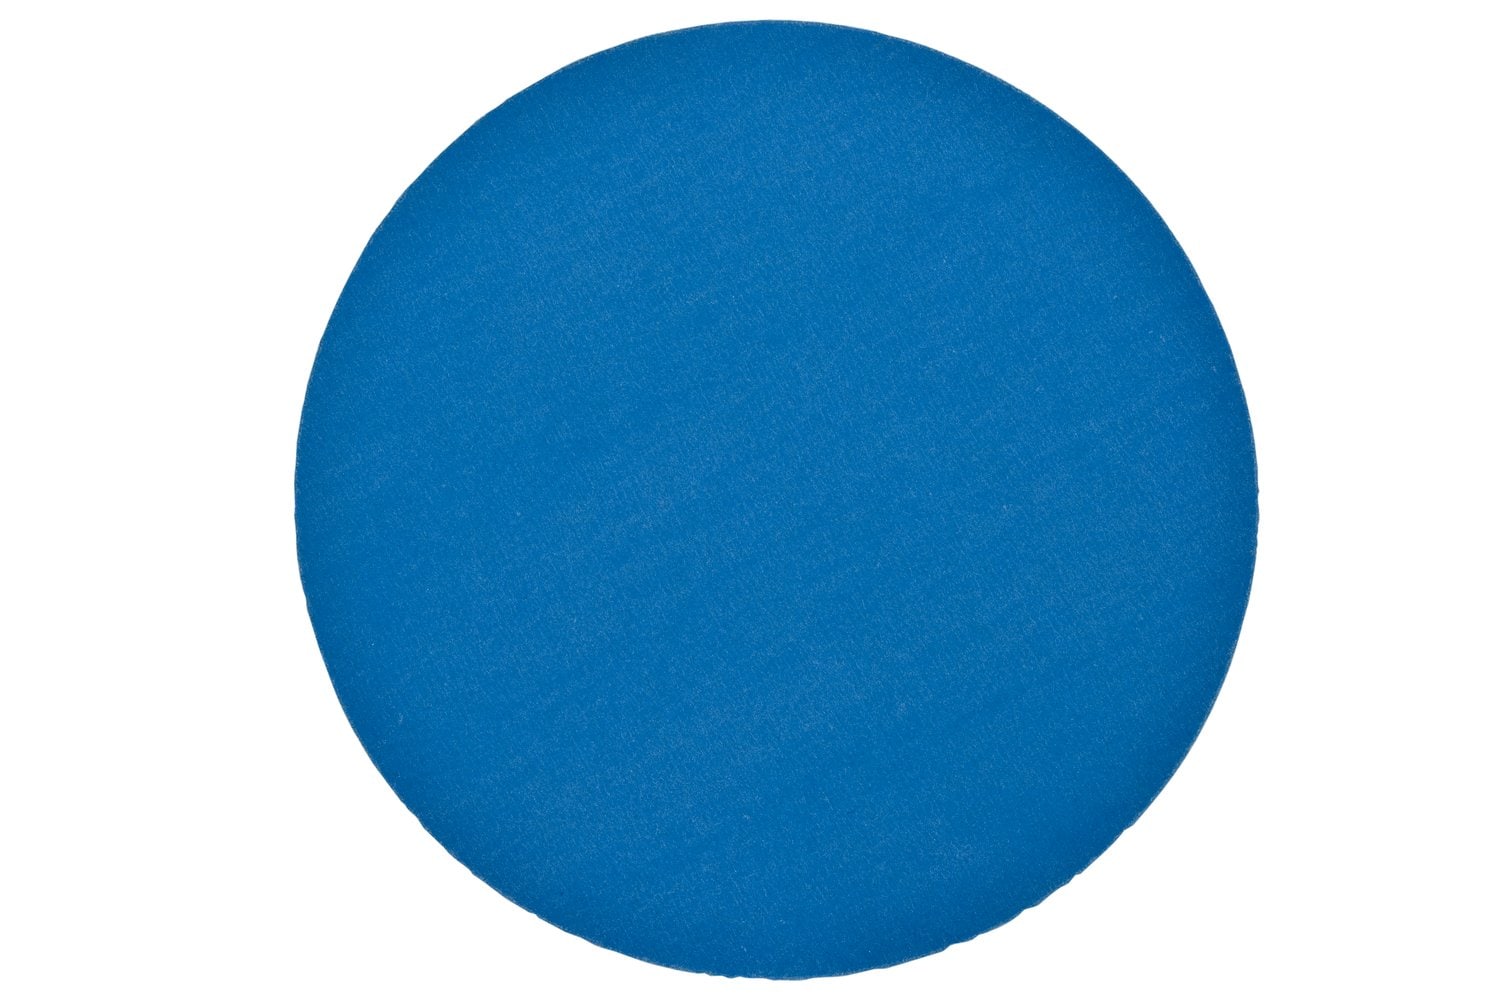 7100199261 - 3M Hookit Blue Abrasive Disc, 36262, 5 in, 600 grade, No Hole, 50 discs per carton, 4 cartons per case